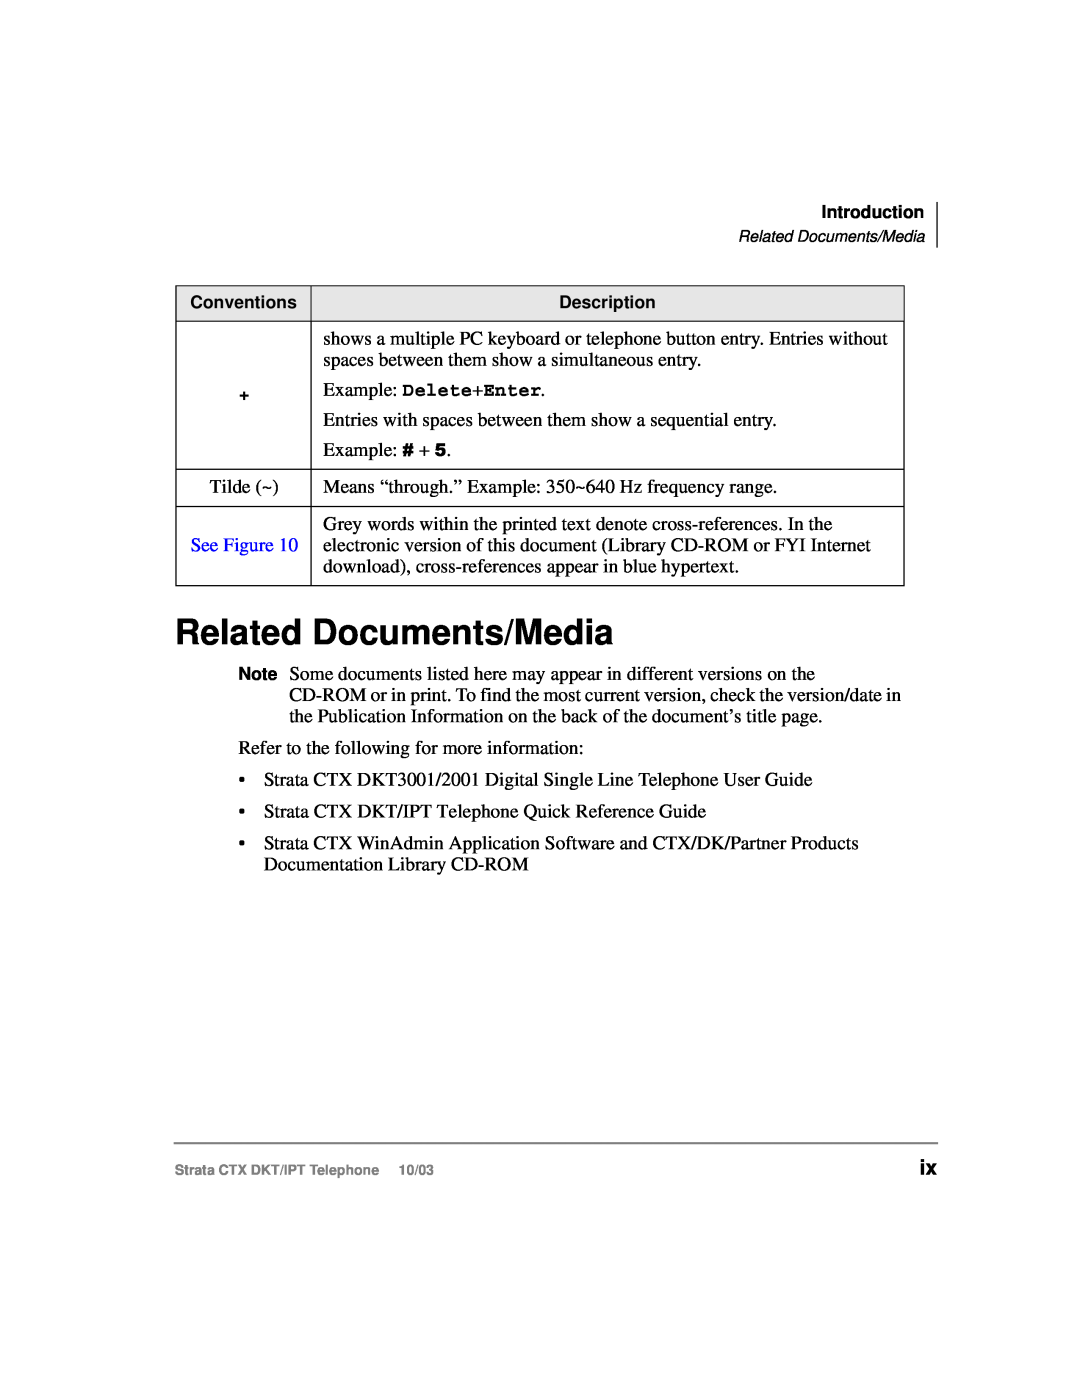 Toshiba DKT, IPT manual Related Documents/Media, See Figure 